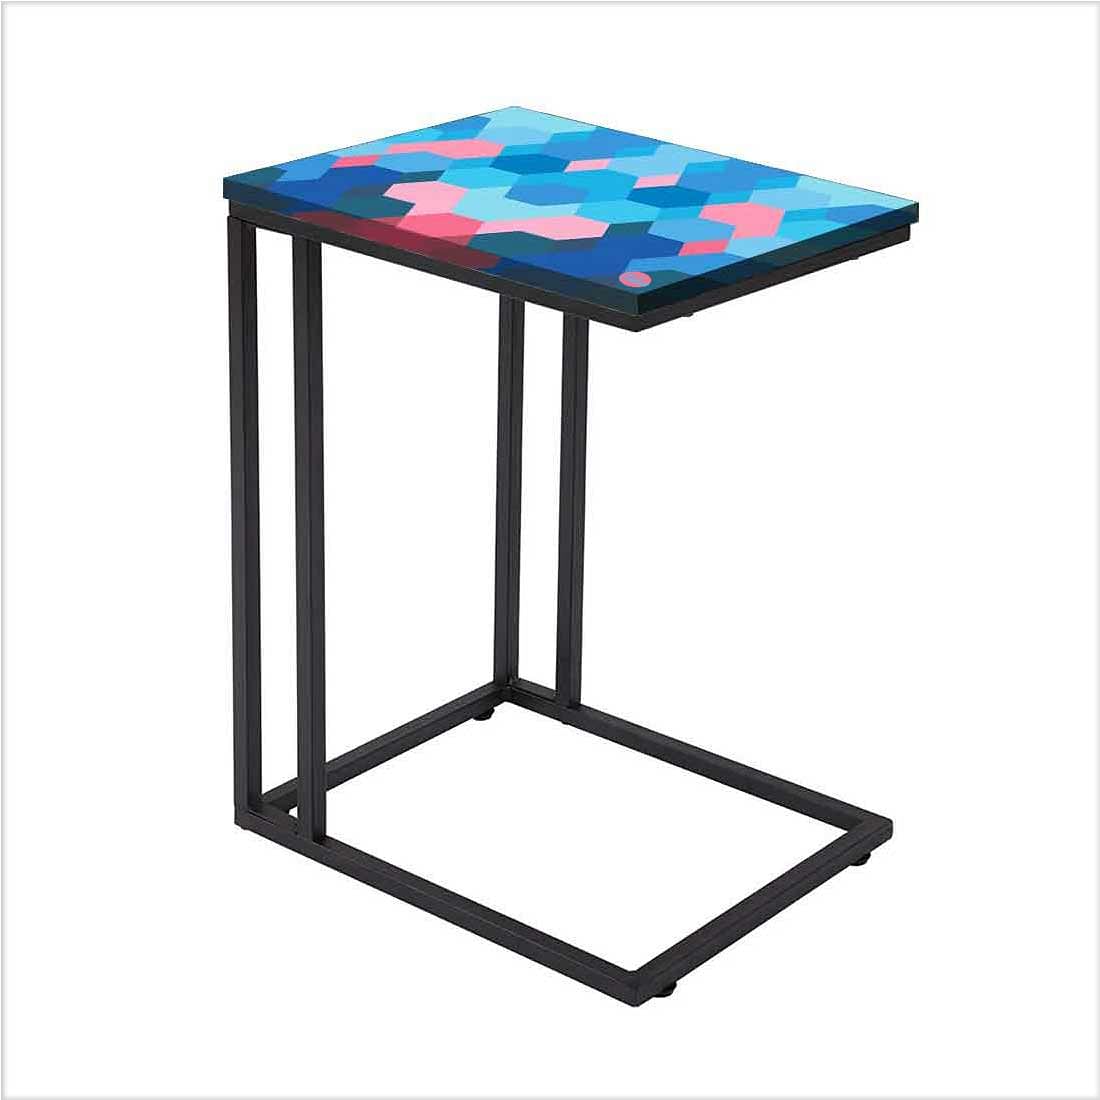 New Blue Metal C Table - Hexagon Pattern Nutcase